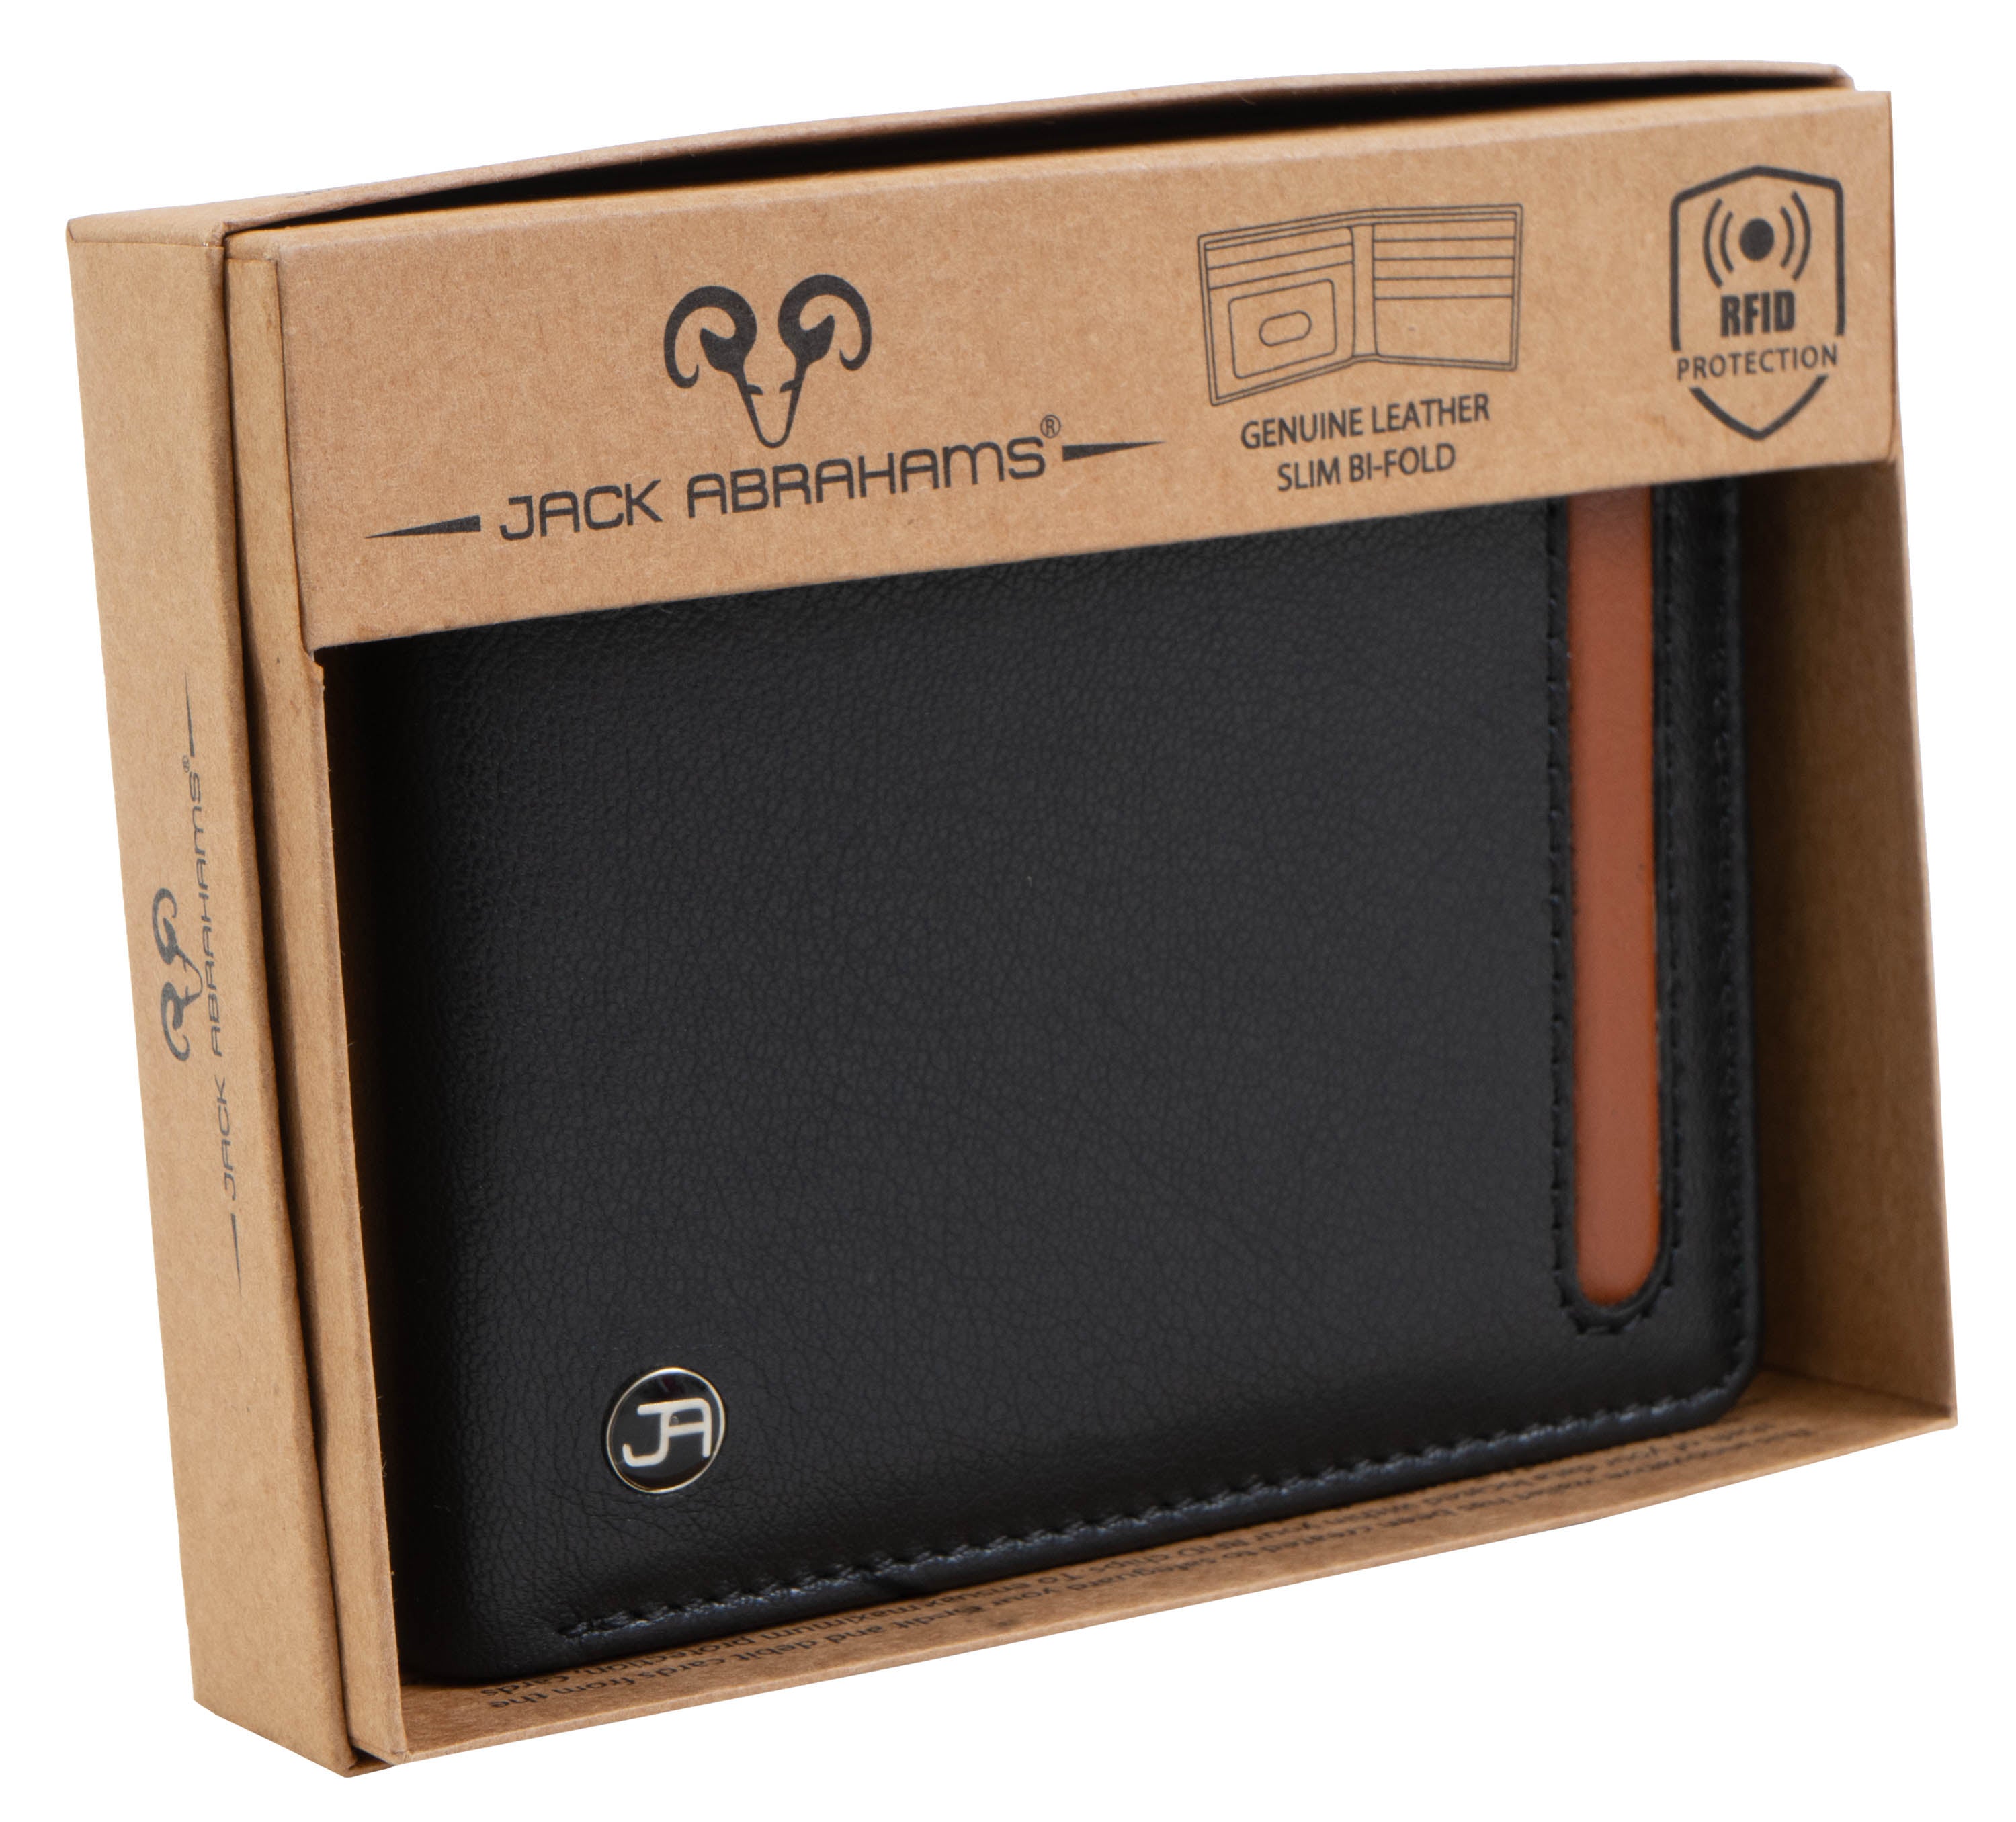 title:Jack Abrahams Bi-Fold RFID Wallet With Flip ID Window Pocket;color:Black/Cognac